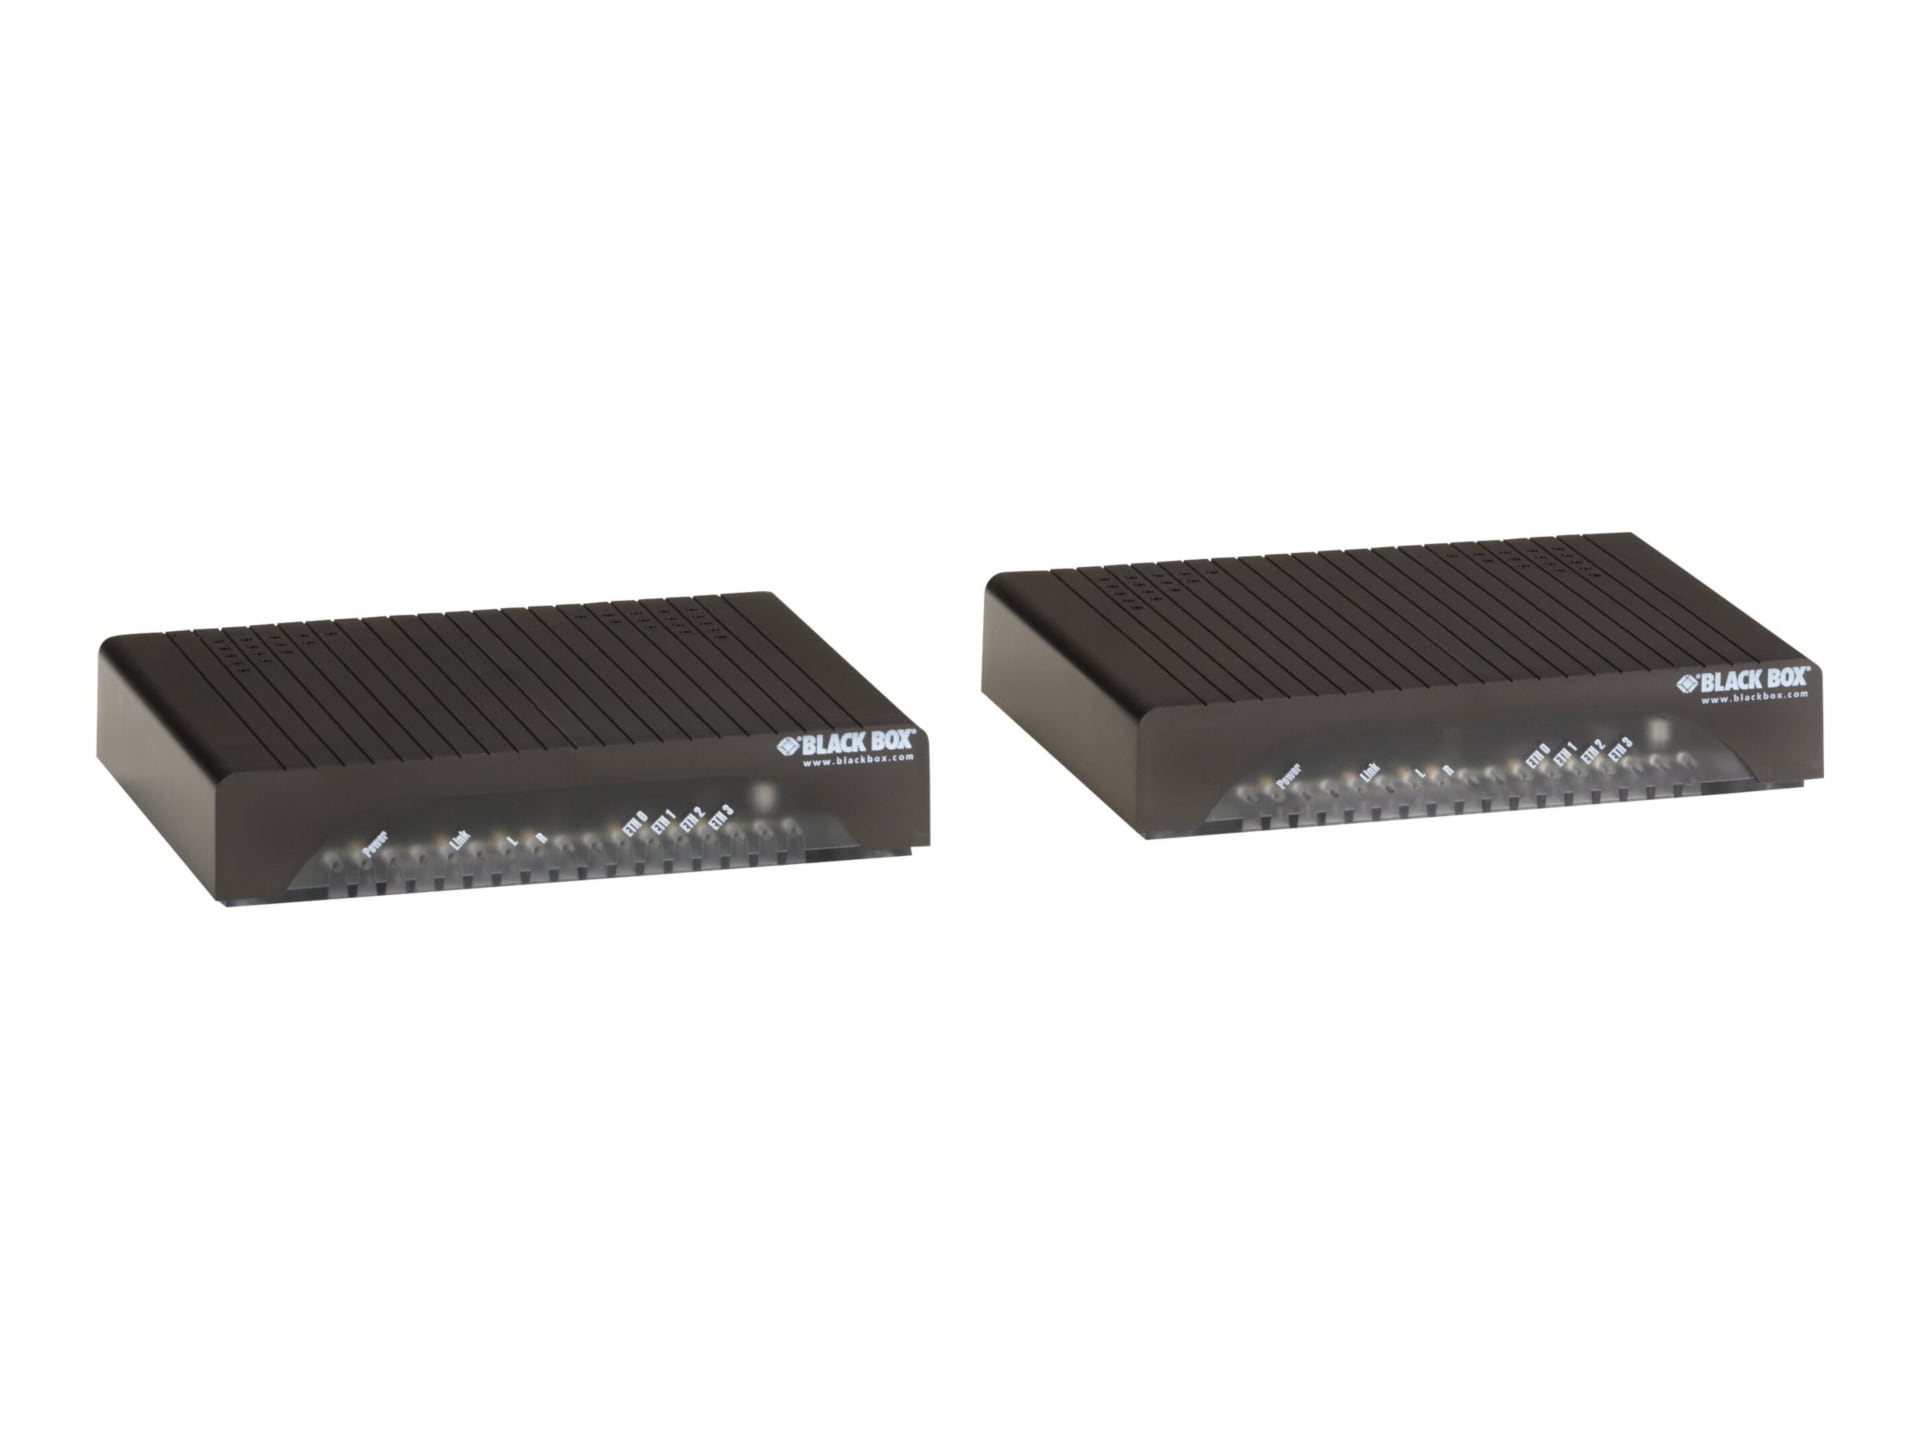 Black Box High-Speed Ethernet Extender Kit - short-haul modem - 10Mb LAN, 1